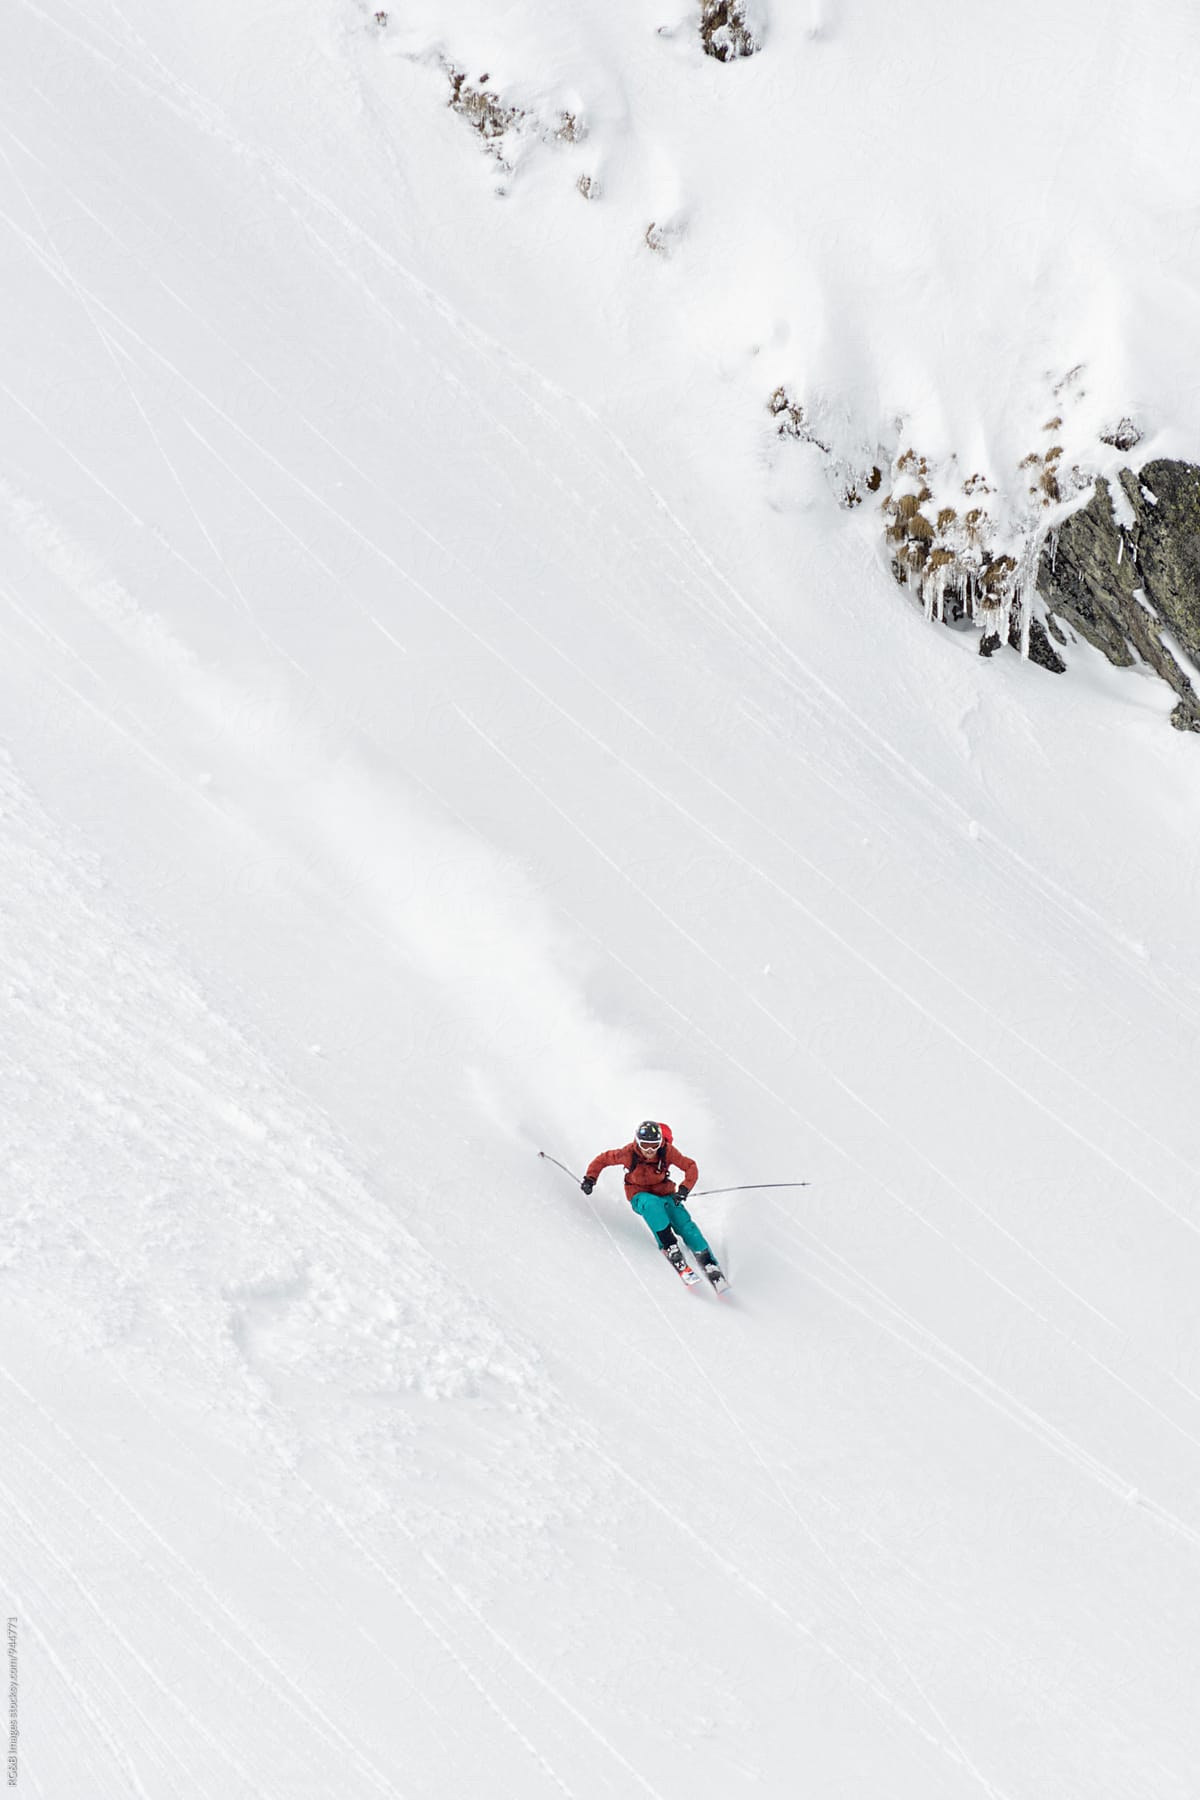 Skier speeding down a snow slope